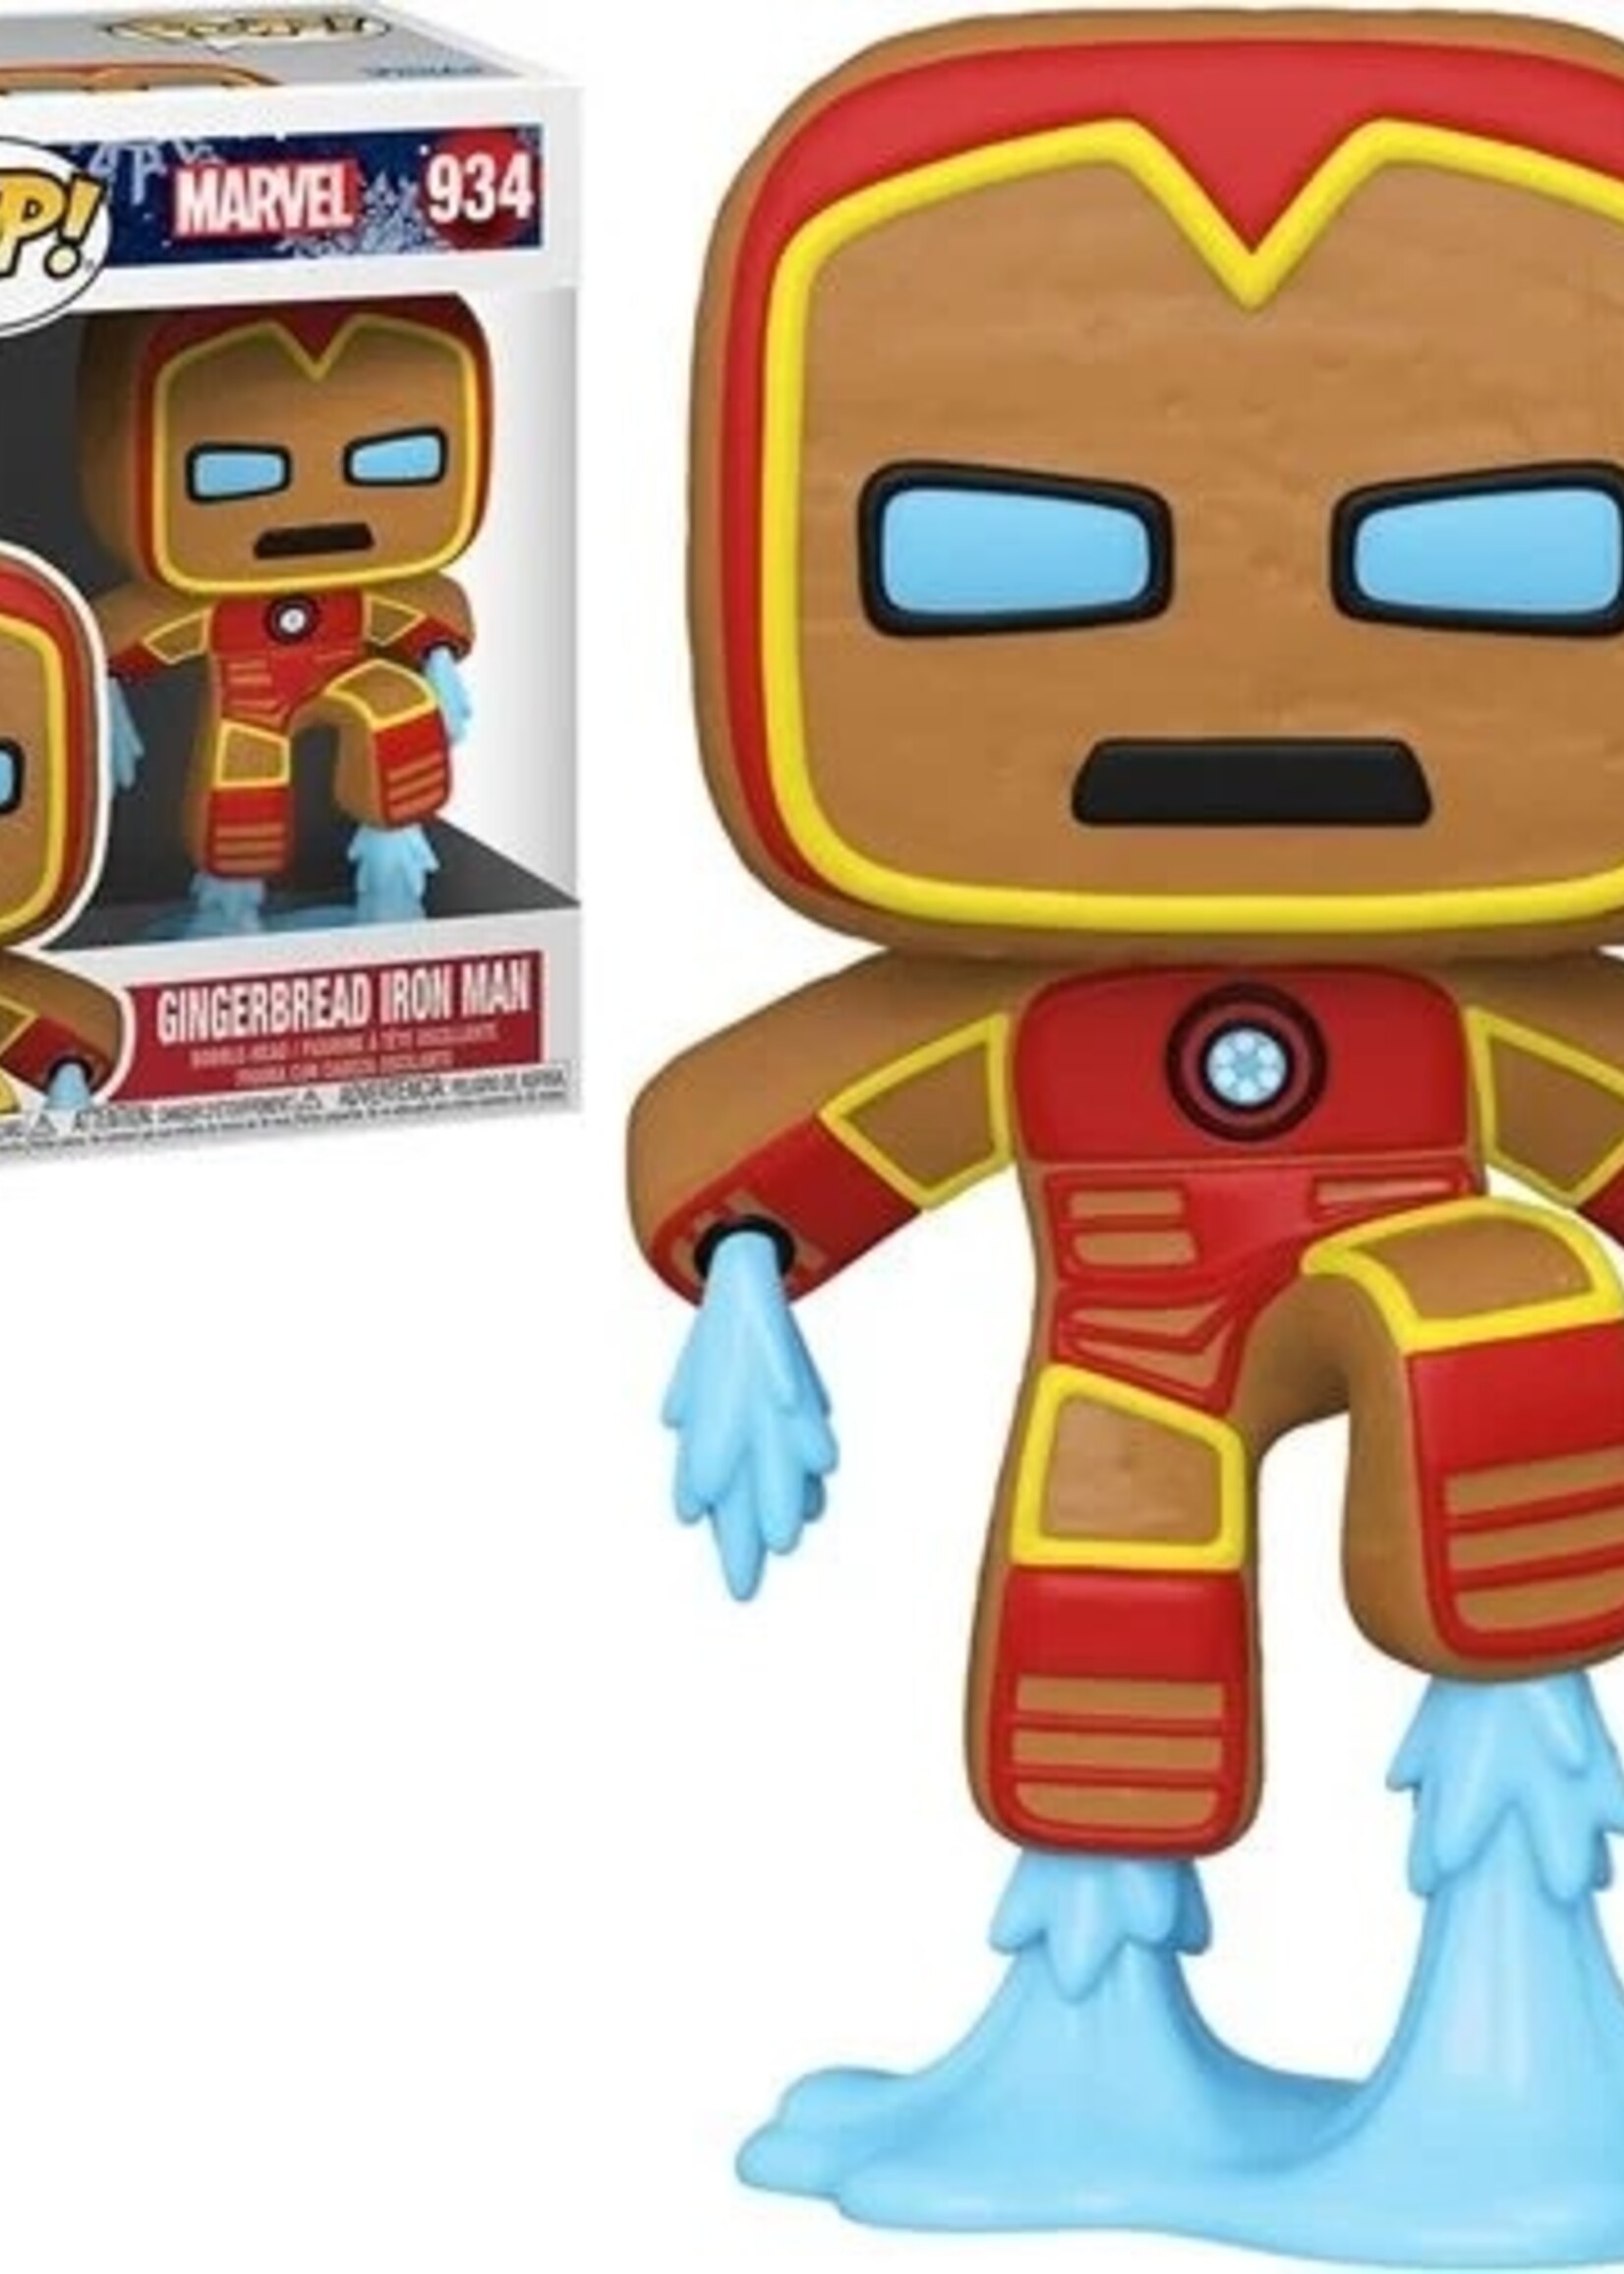 Funko Pop! Marvel: Holiday - Iron Man #1383